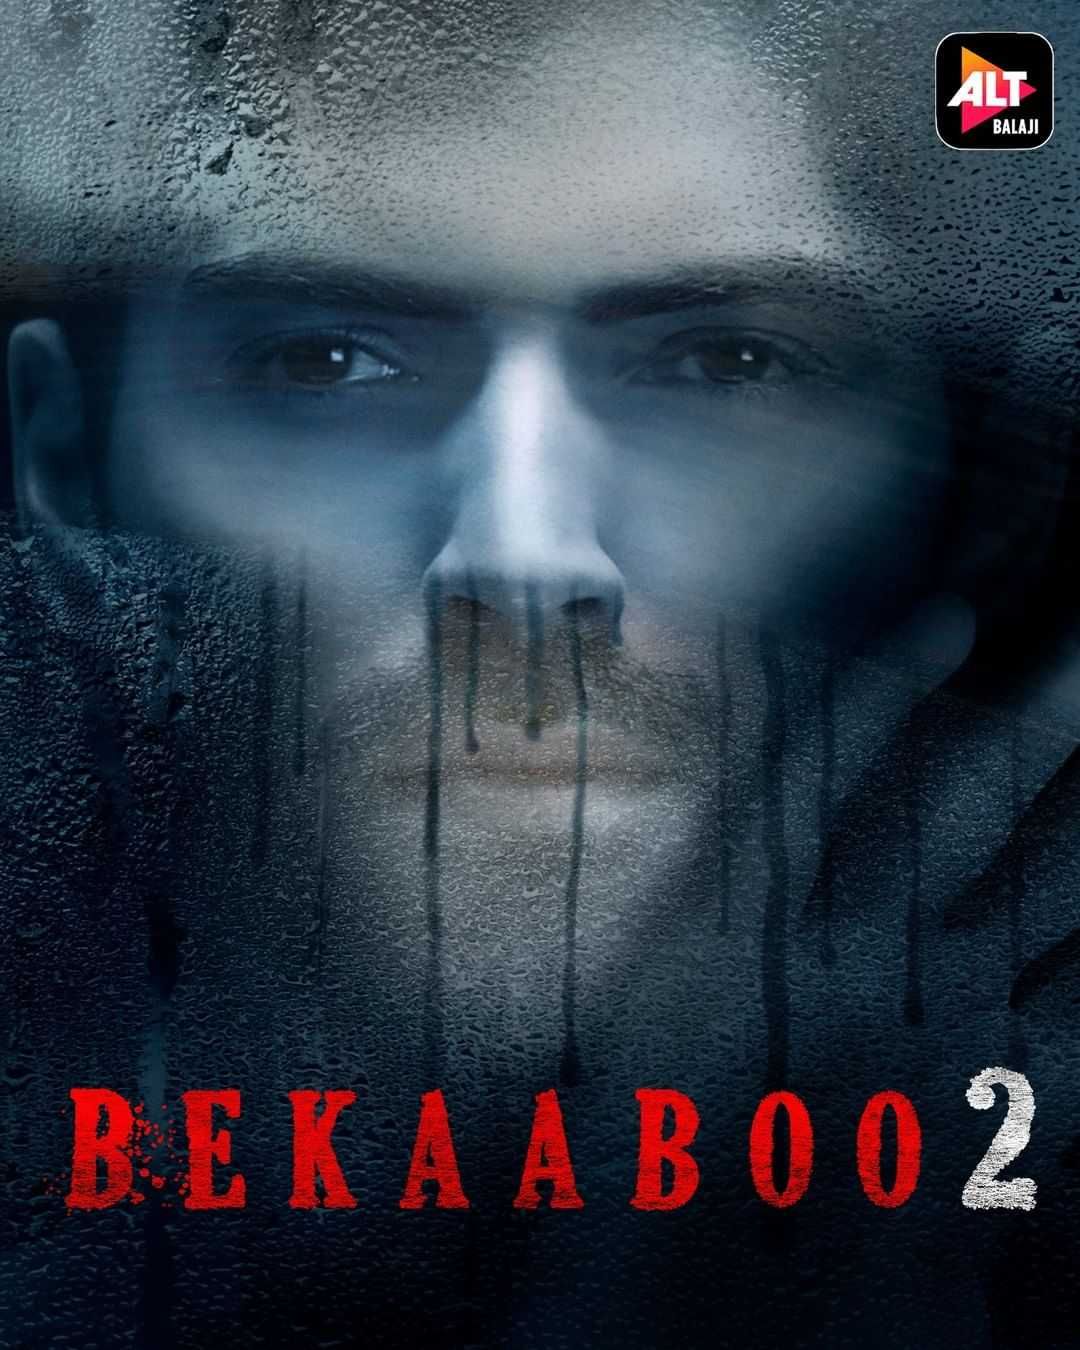 Bekaaboo sezona 2 (ALTBalaji) Glumci, uloga i ekipa